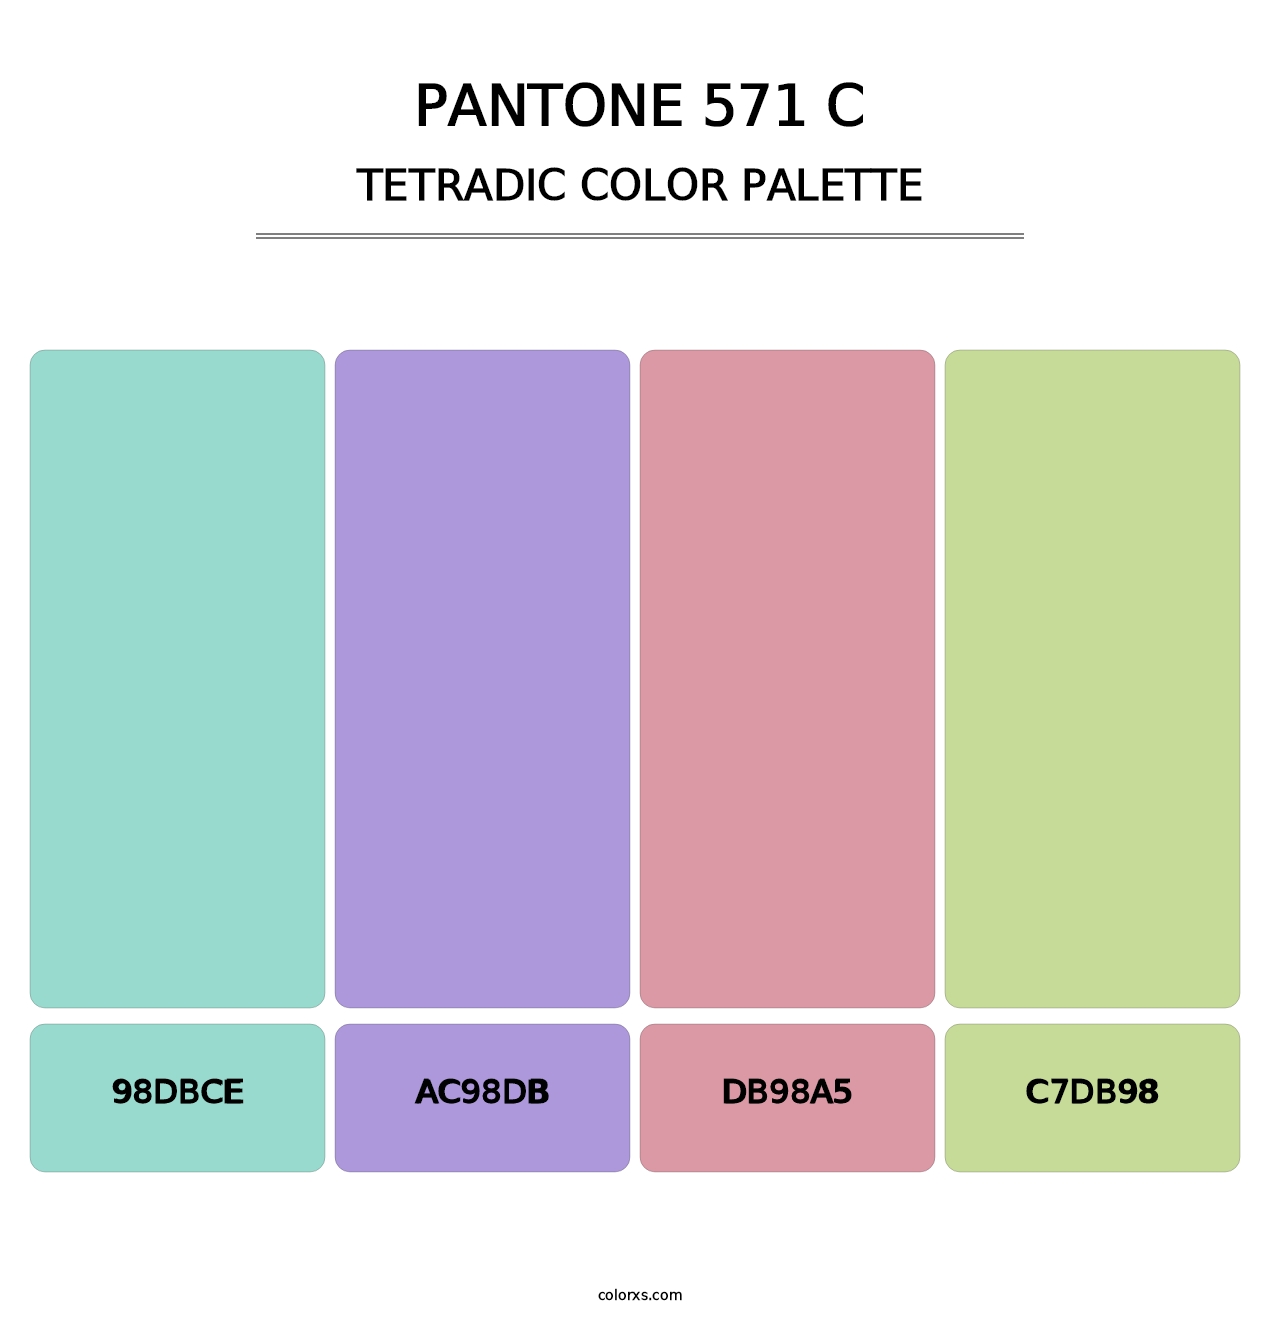 PANTONE 571 C - Tetradic Color Palette